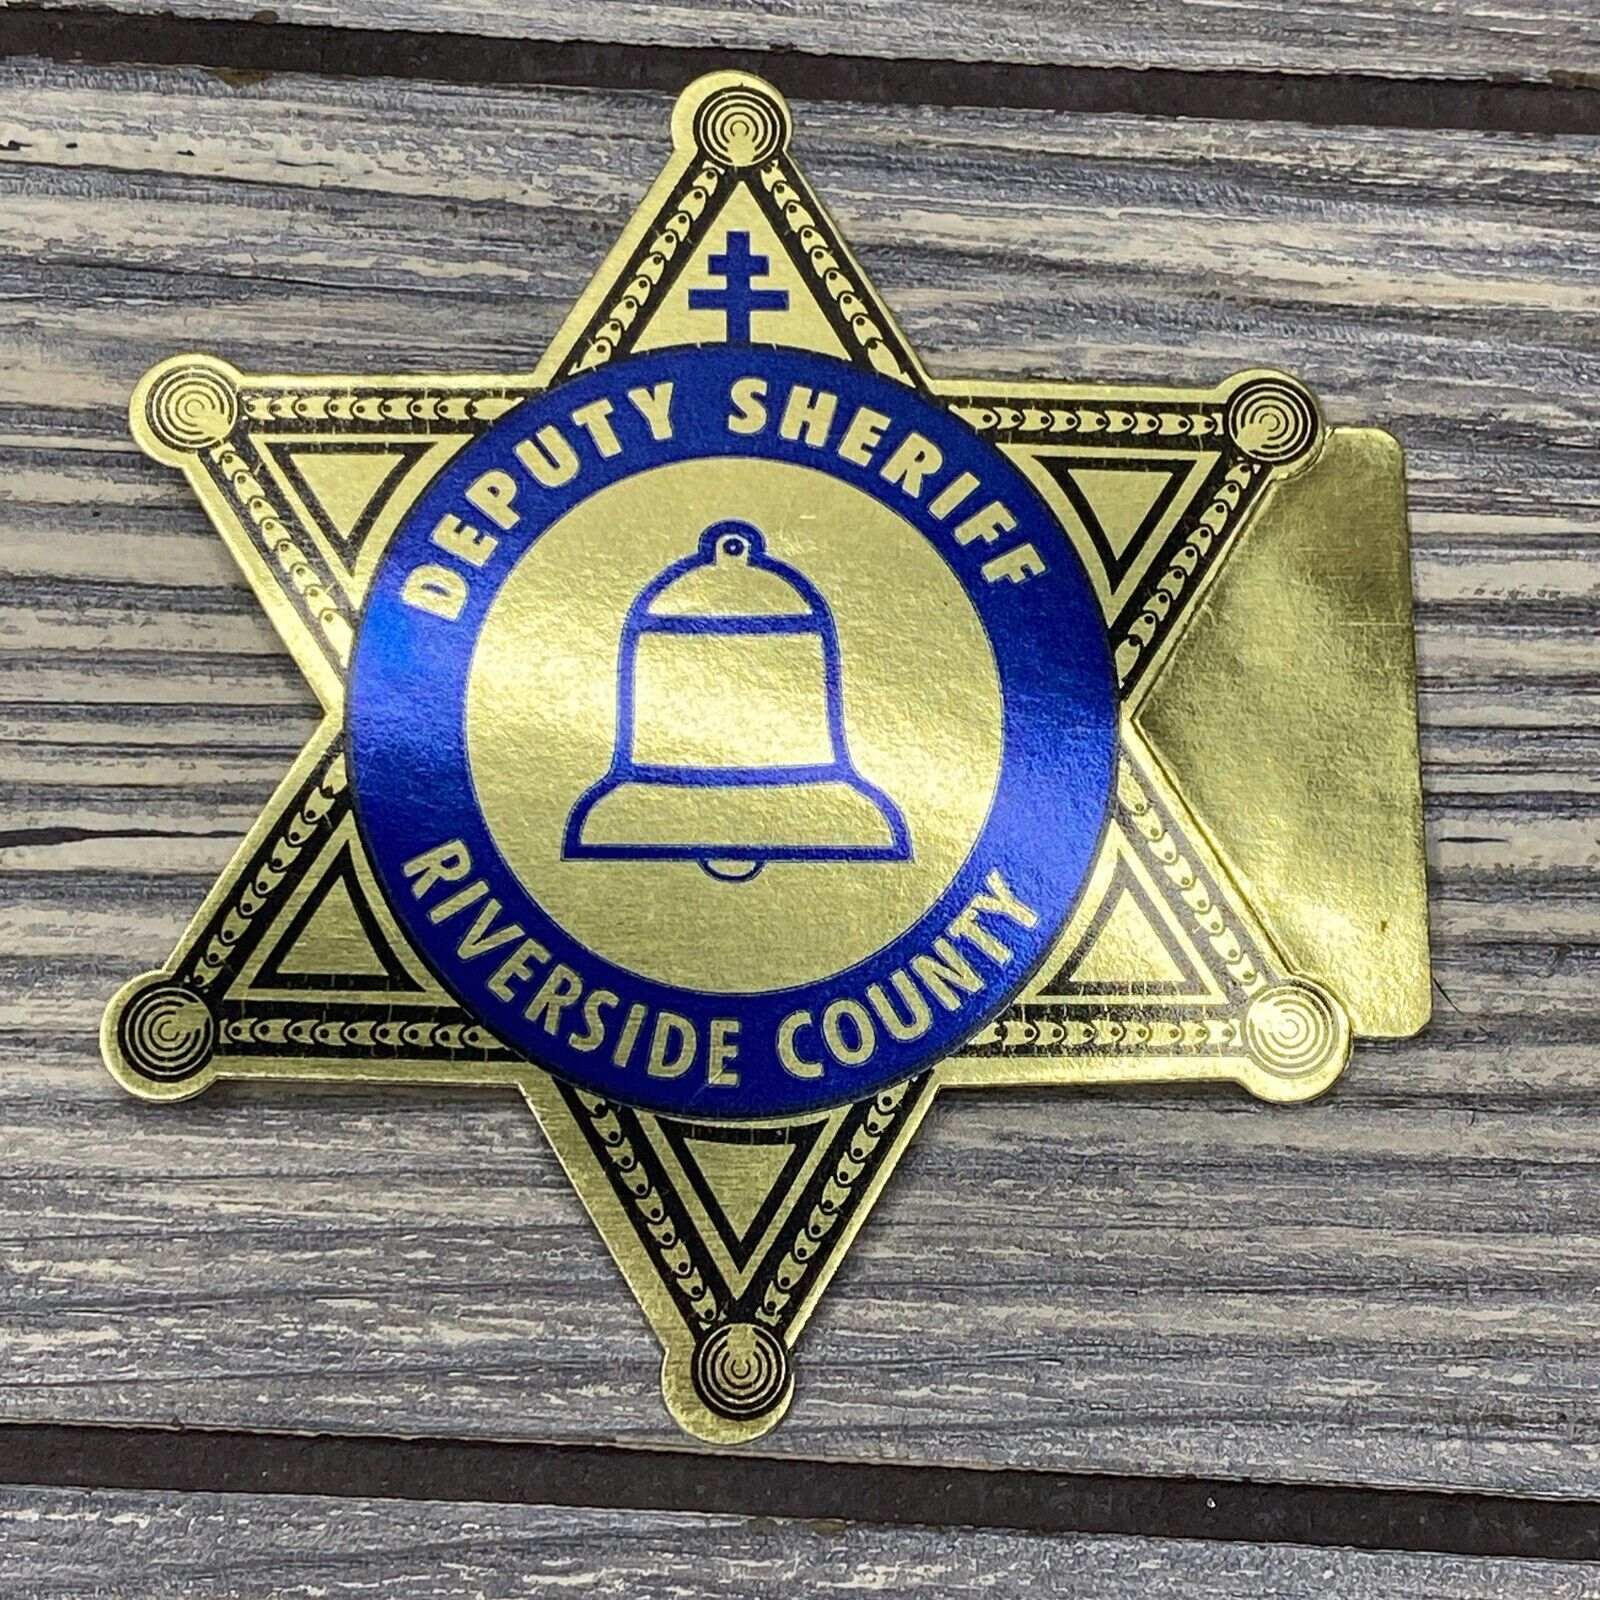 Vintage Deputy Sheriff Riverside County Car Decal Sticker Gold Blue Star 